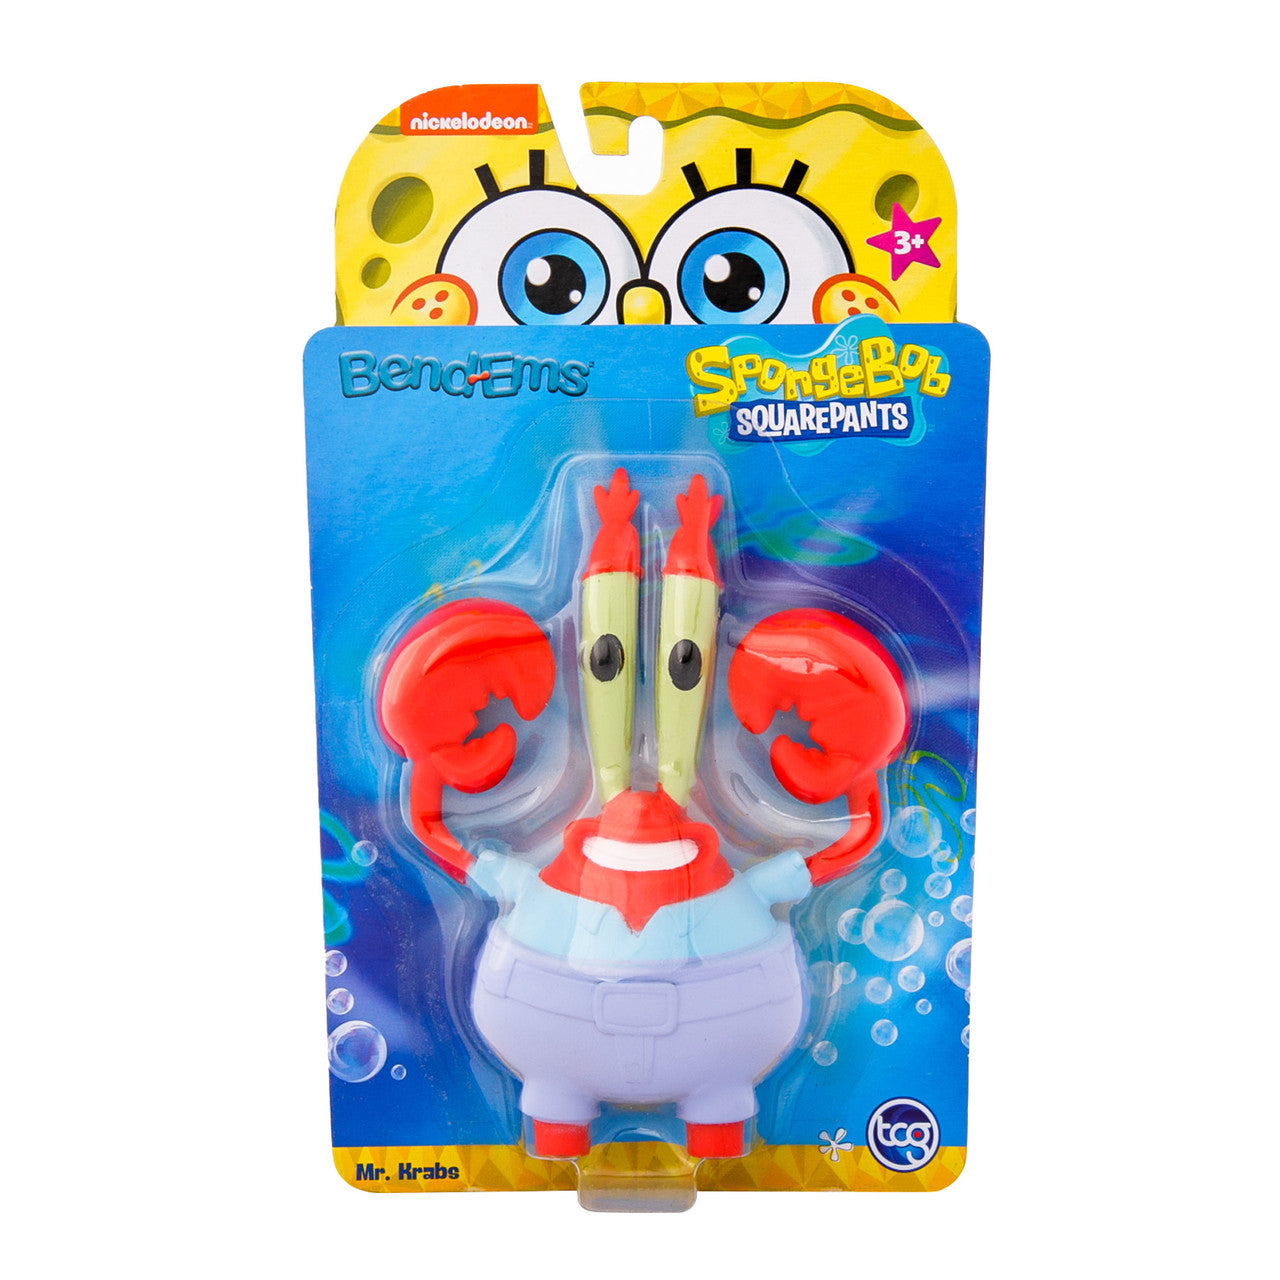 NJ Croce-Bend-Ems Spongebob Mr. Krabbs-55028-Legacy Toys